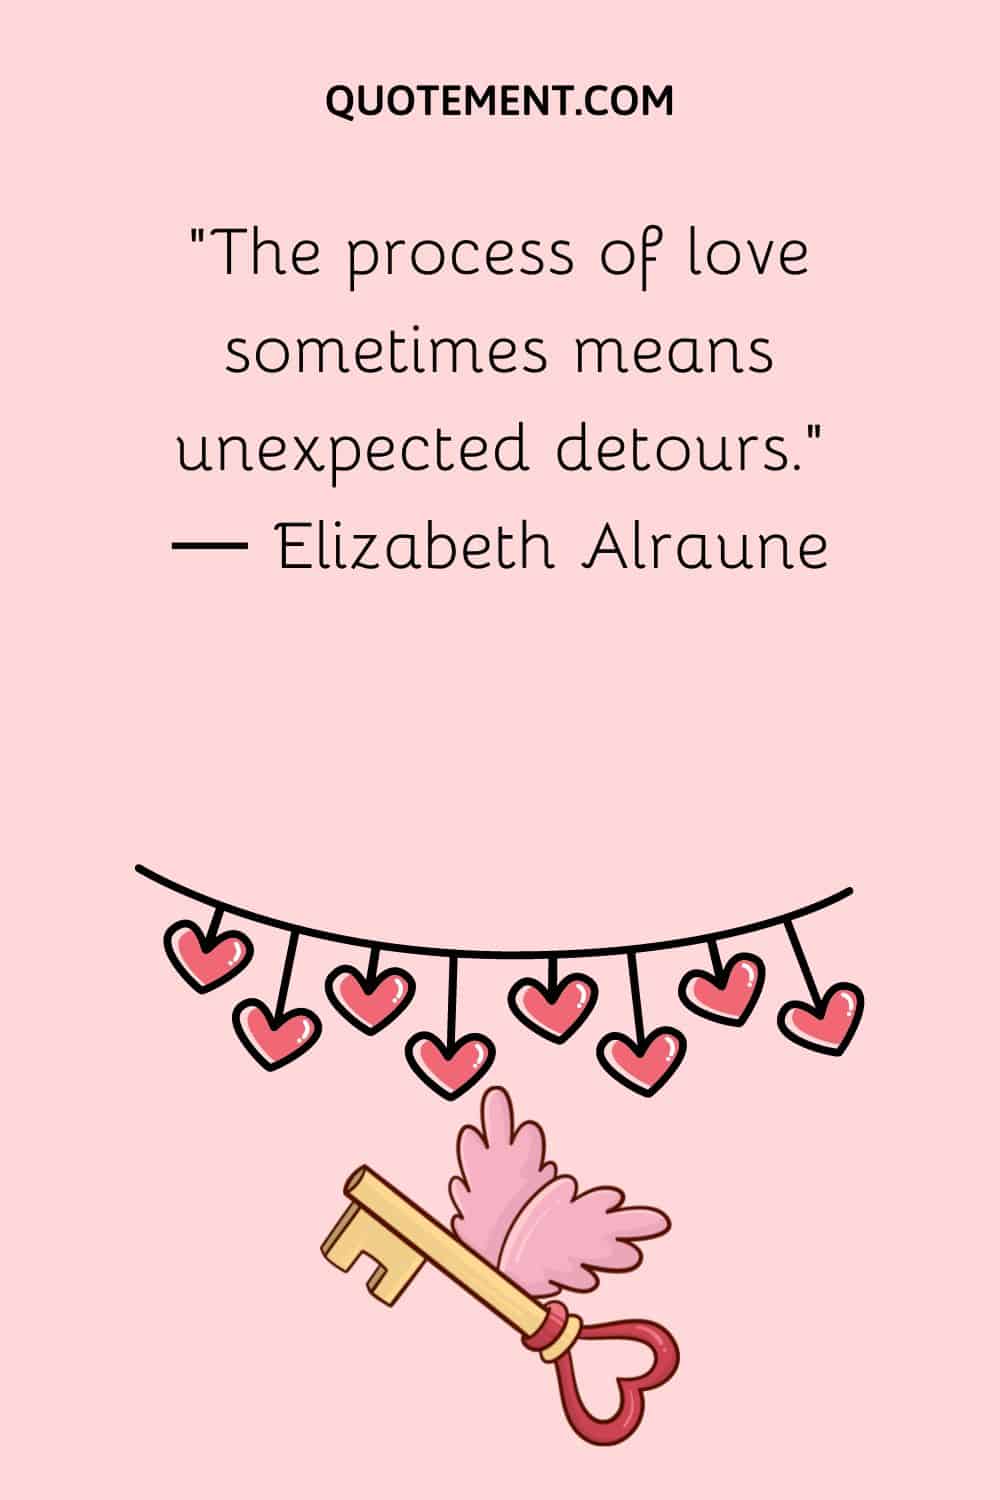 “The process of love sometimes means unexpected detours.” ― Elizabeth Alraune